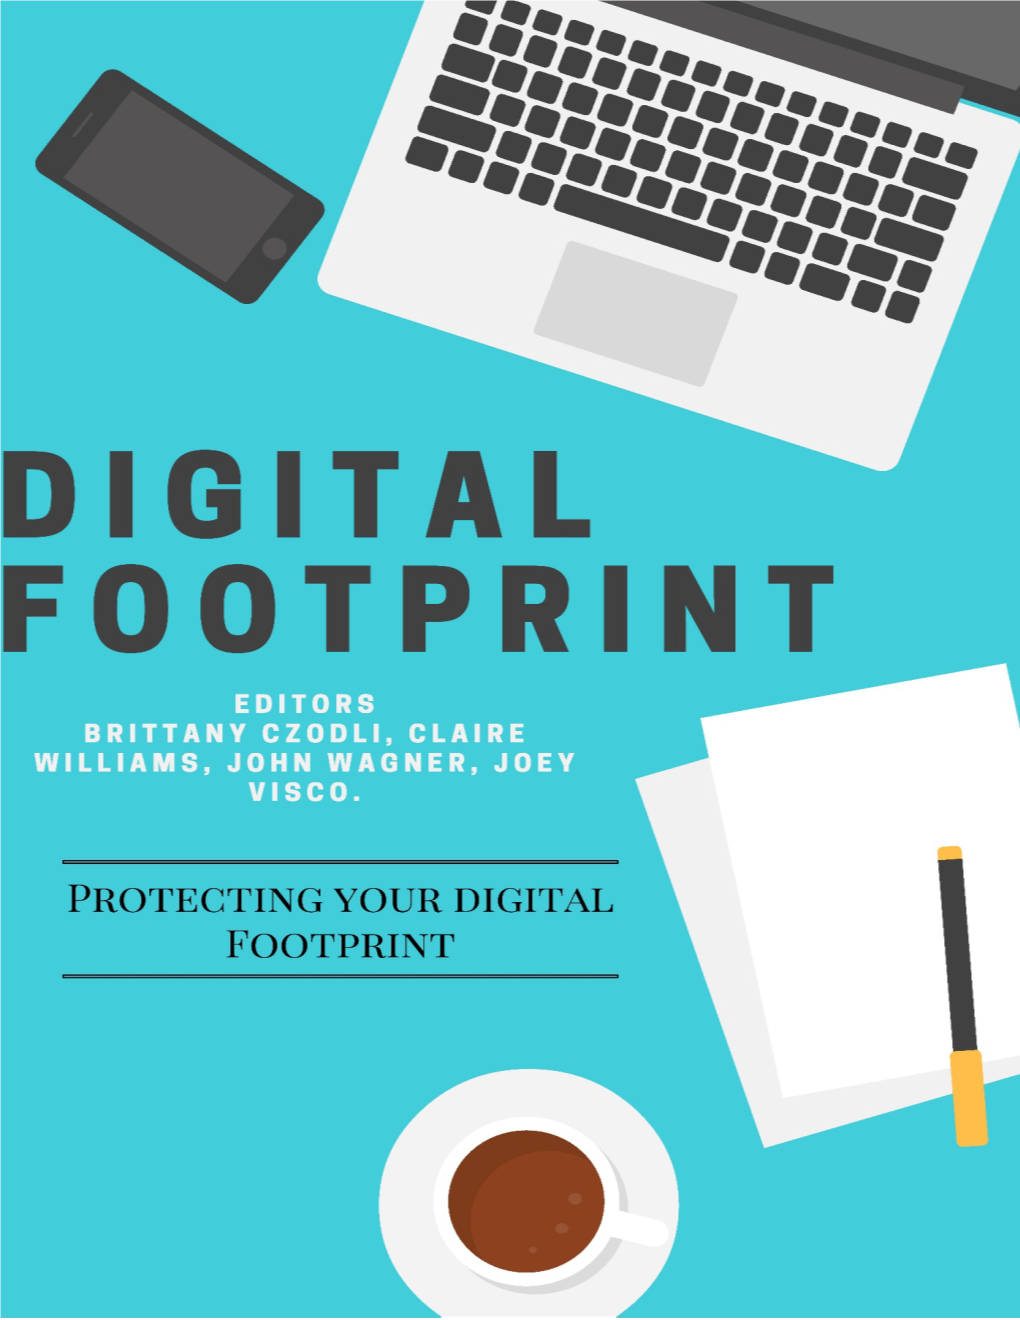 The Digital Footprint